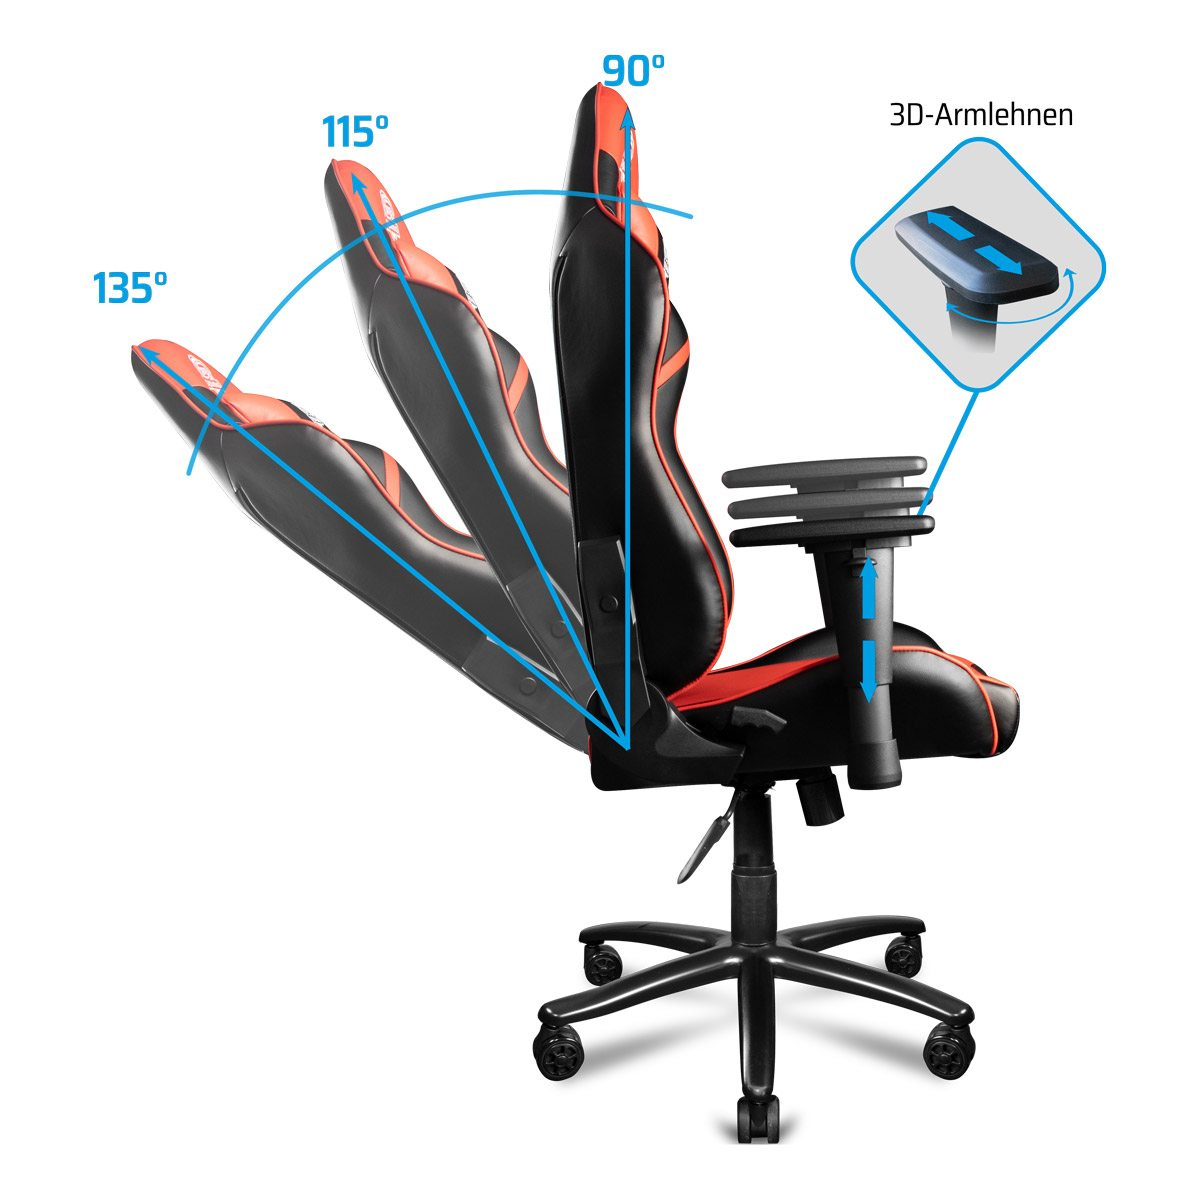 ONE GAMING Chair Pro Gaming Stuhl, Red / rot schwarz